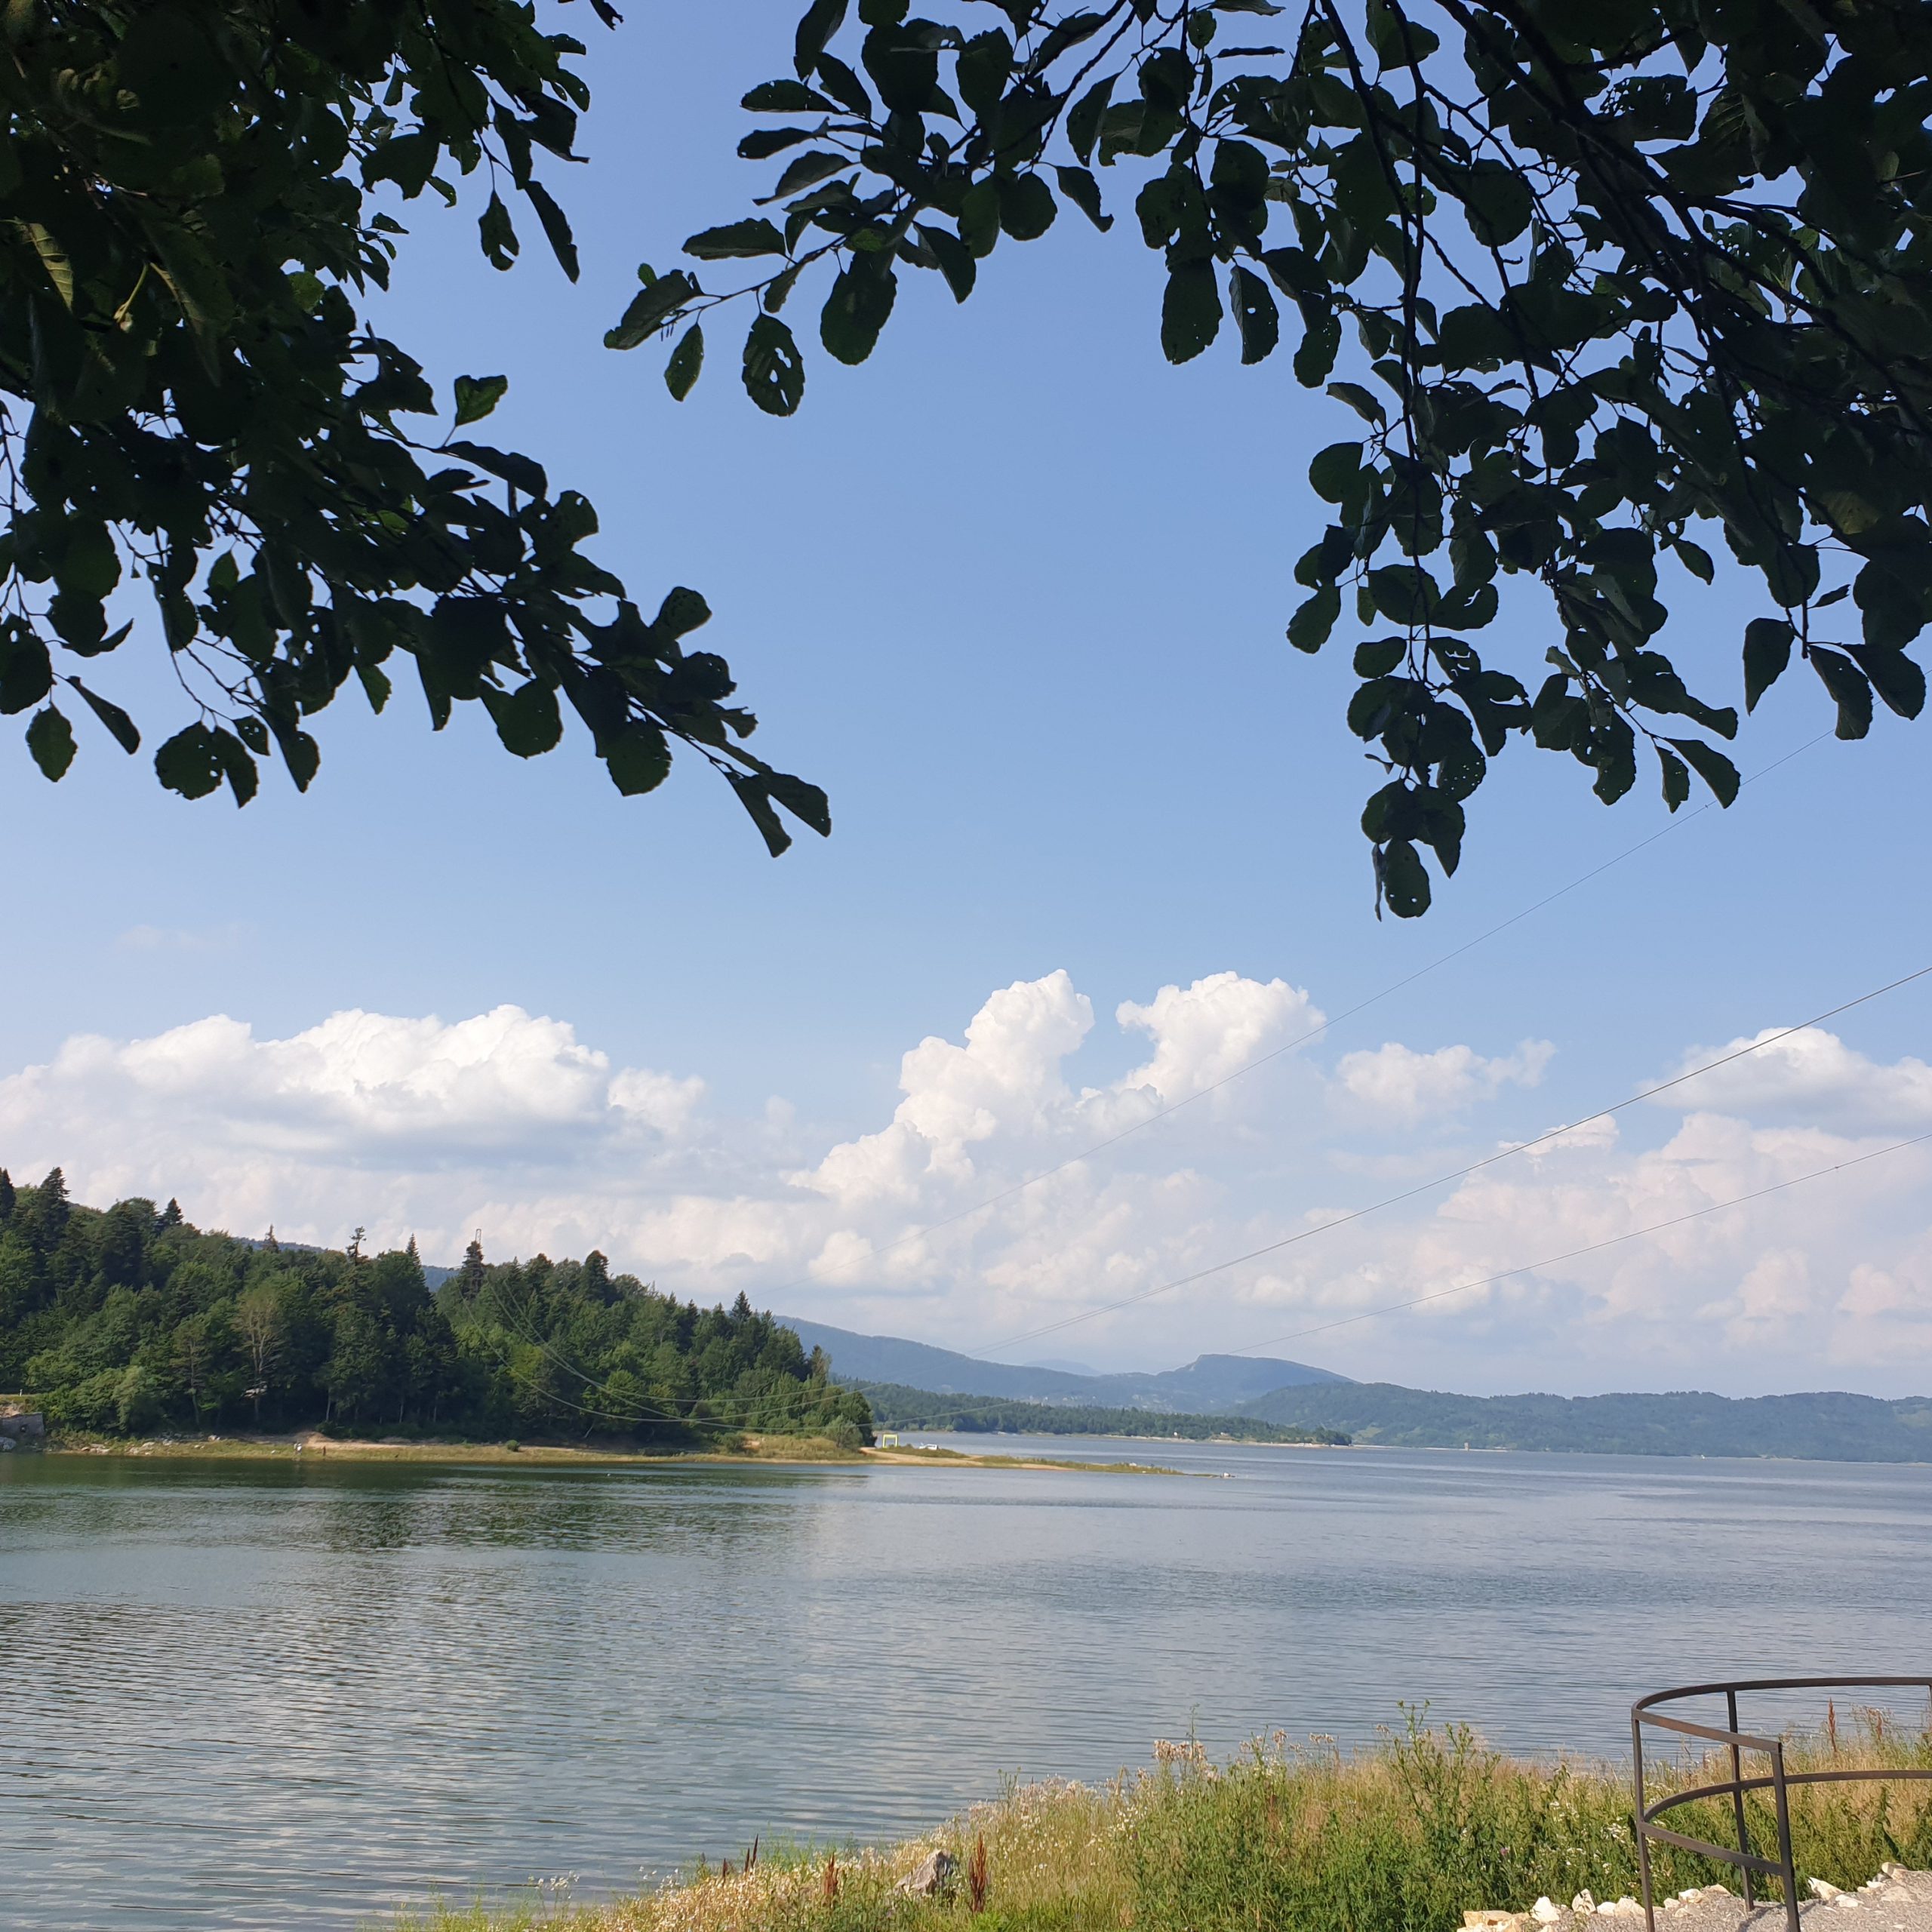 Shaori Reservoir